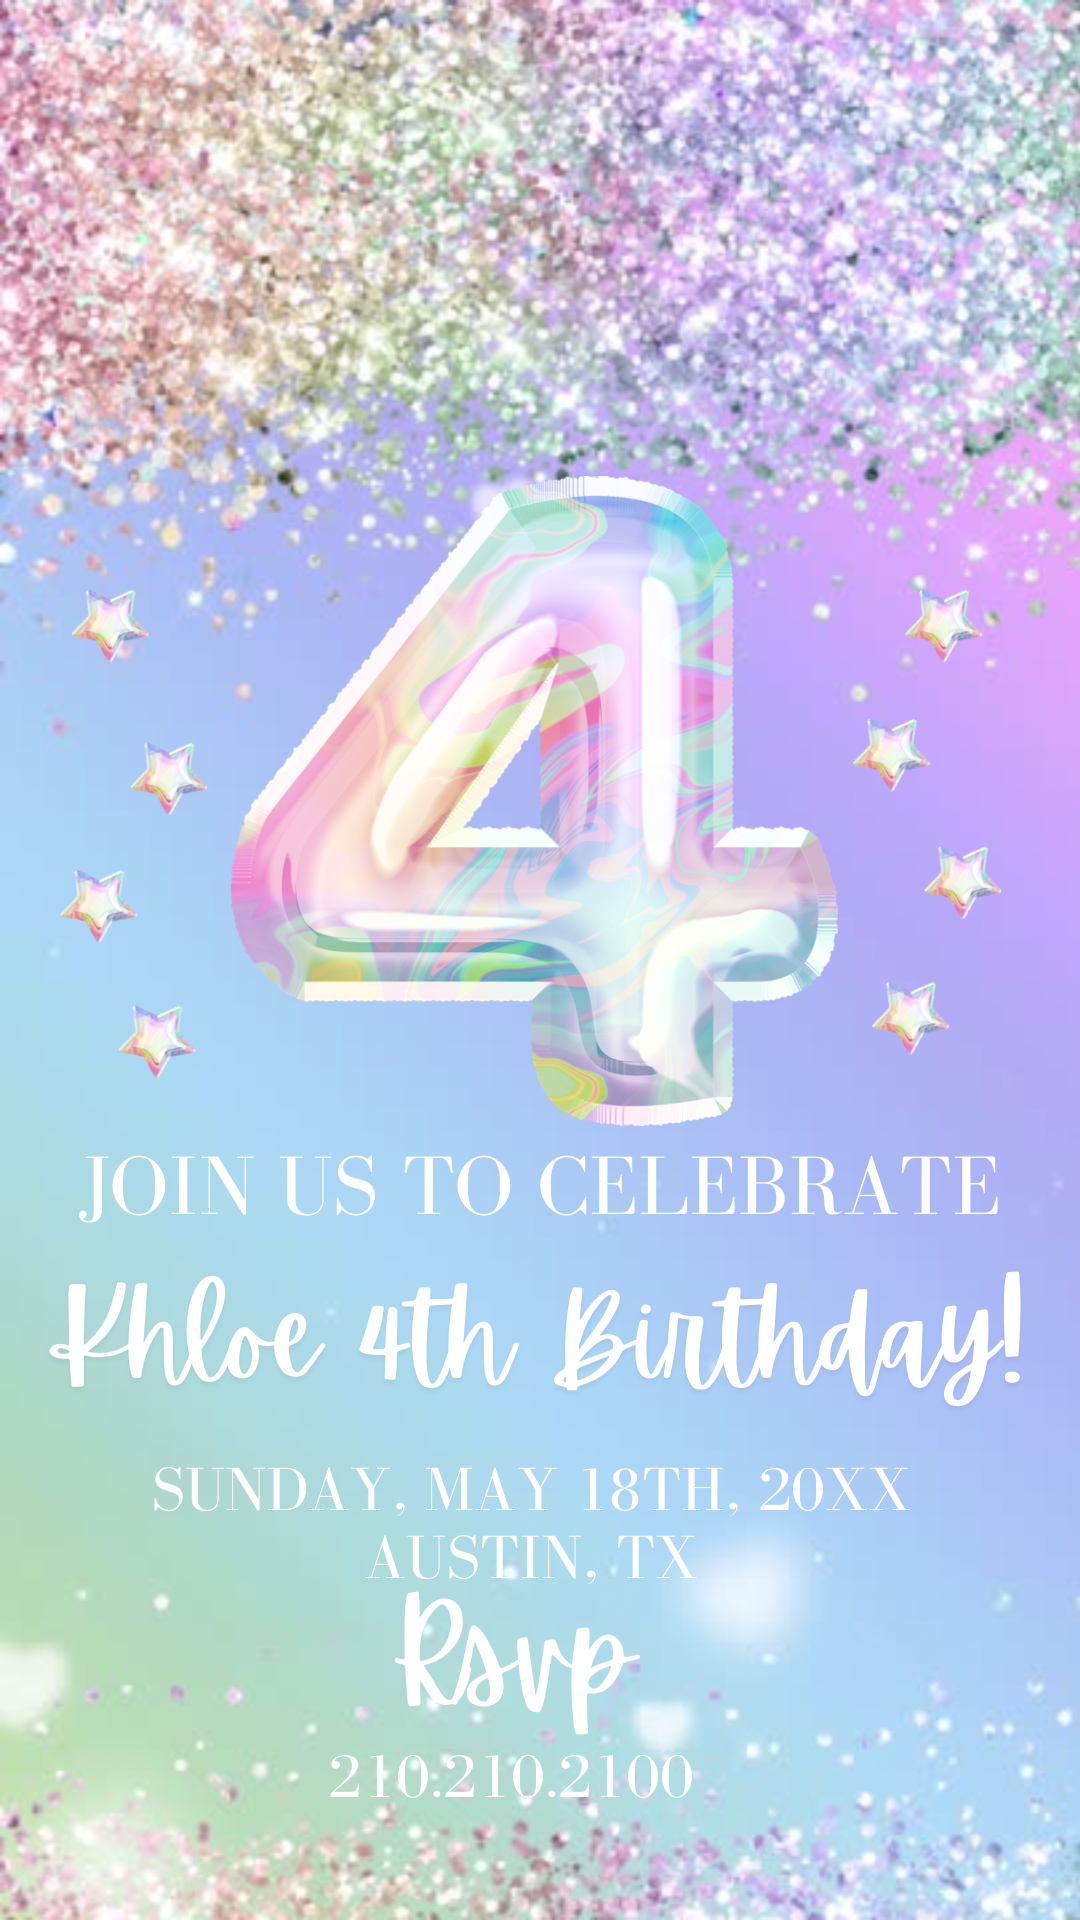 4th Birthday Pastel Video Invitation, Iridescent Glitter Invitation